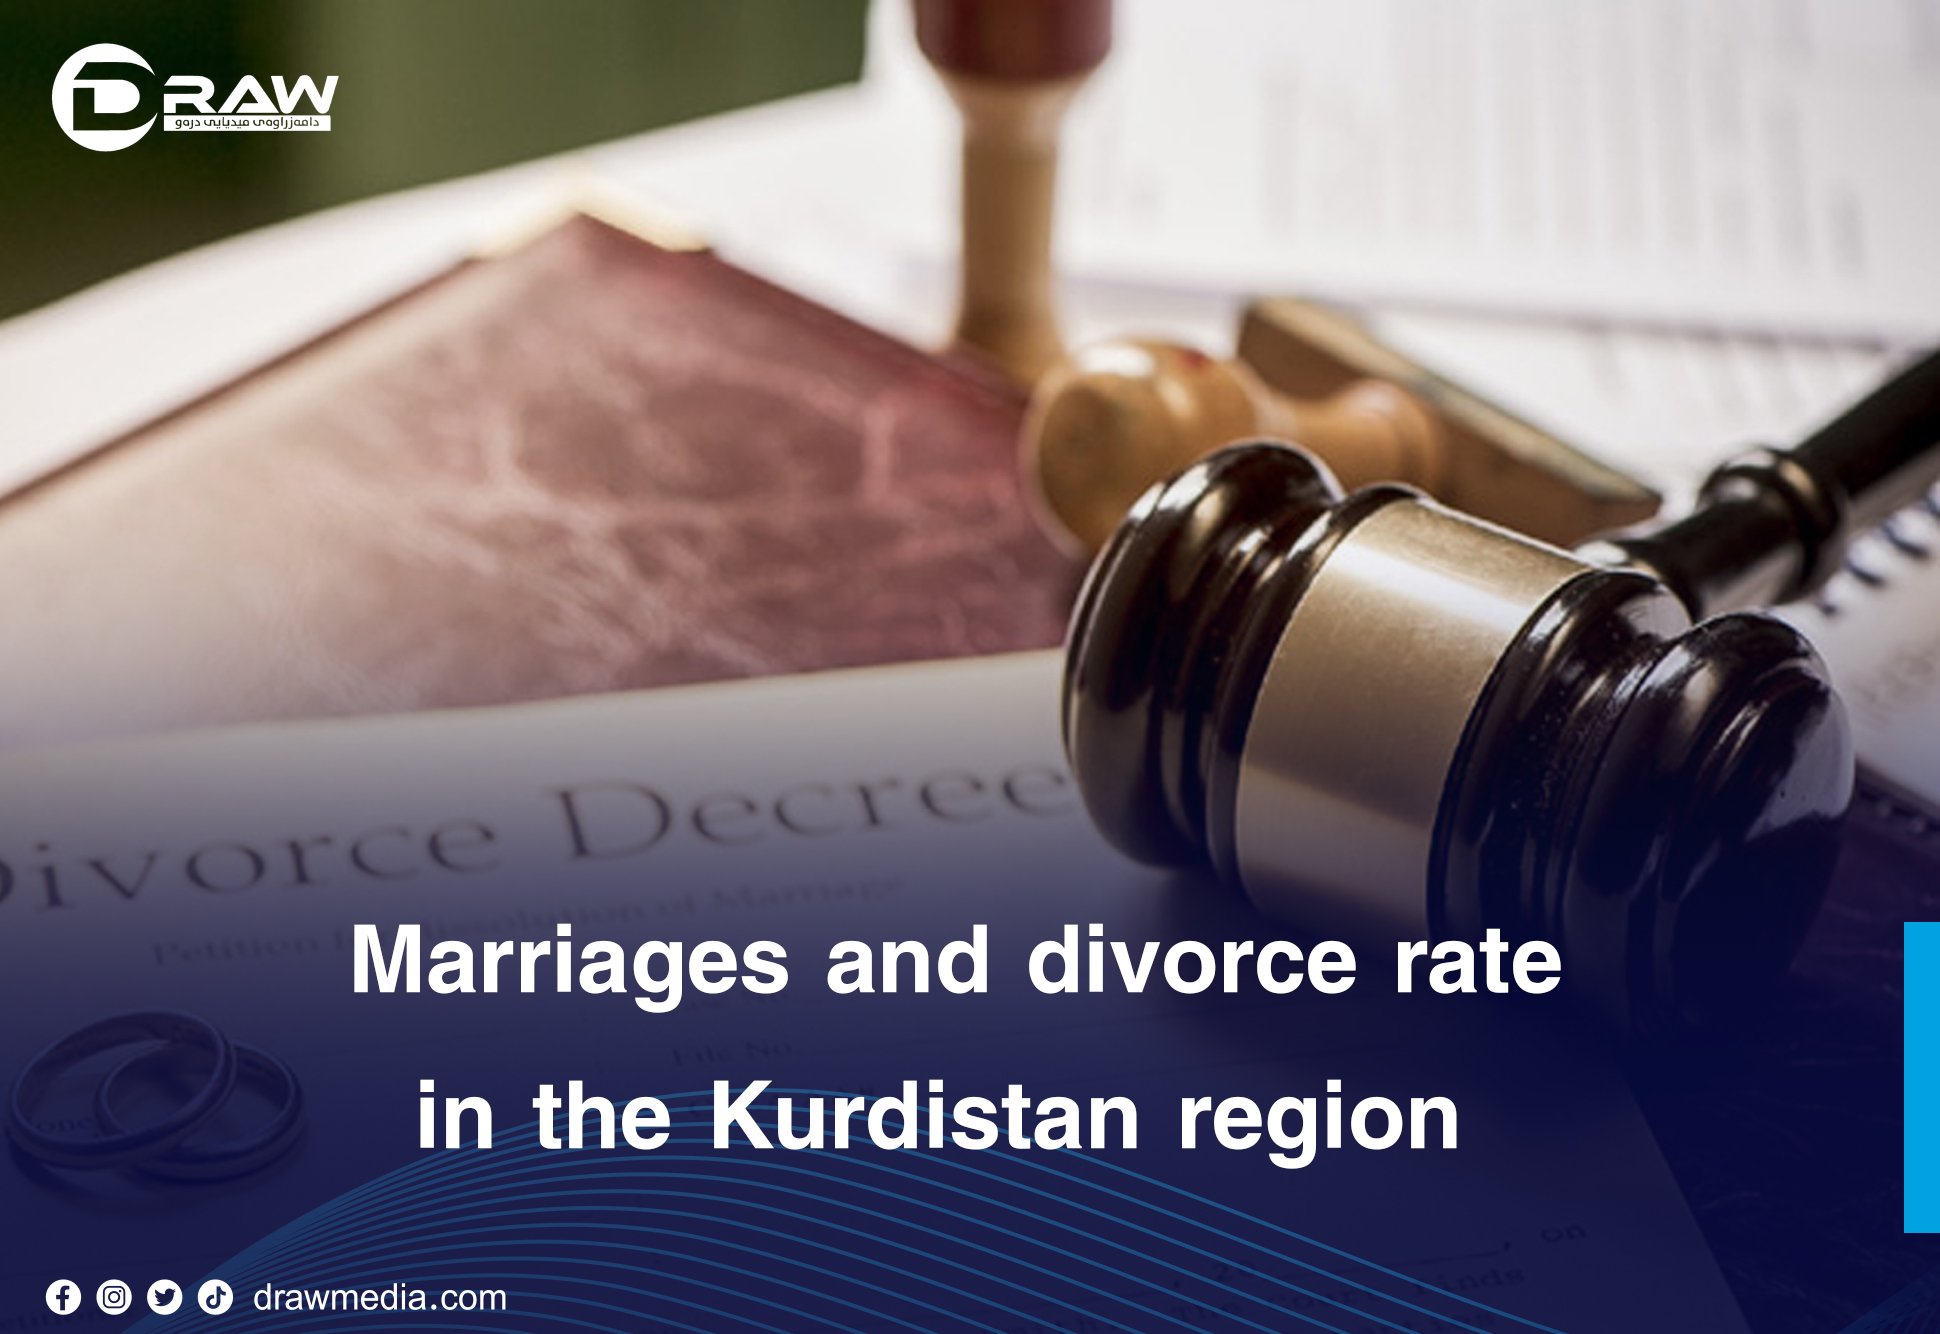 DrawMedia.net / Marriages and divorce rate in the Kurdistan region